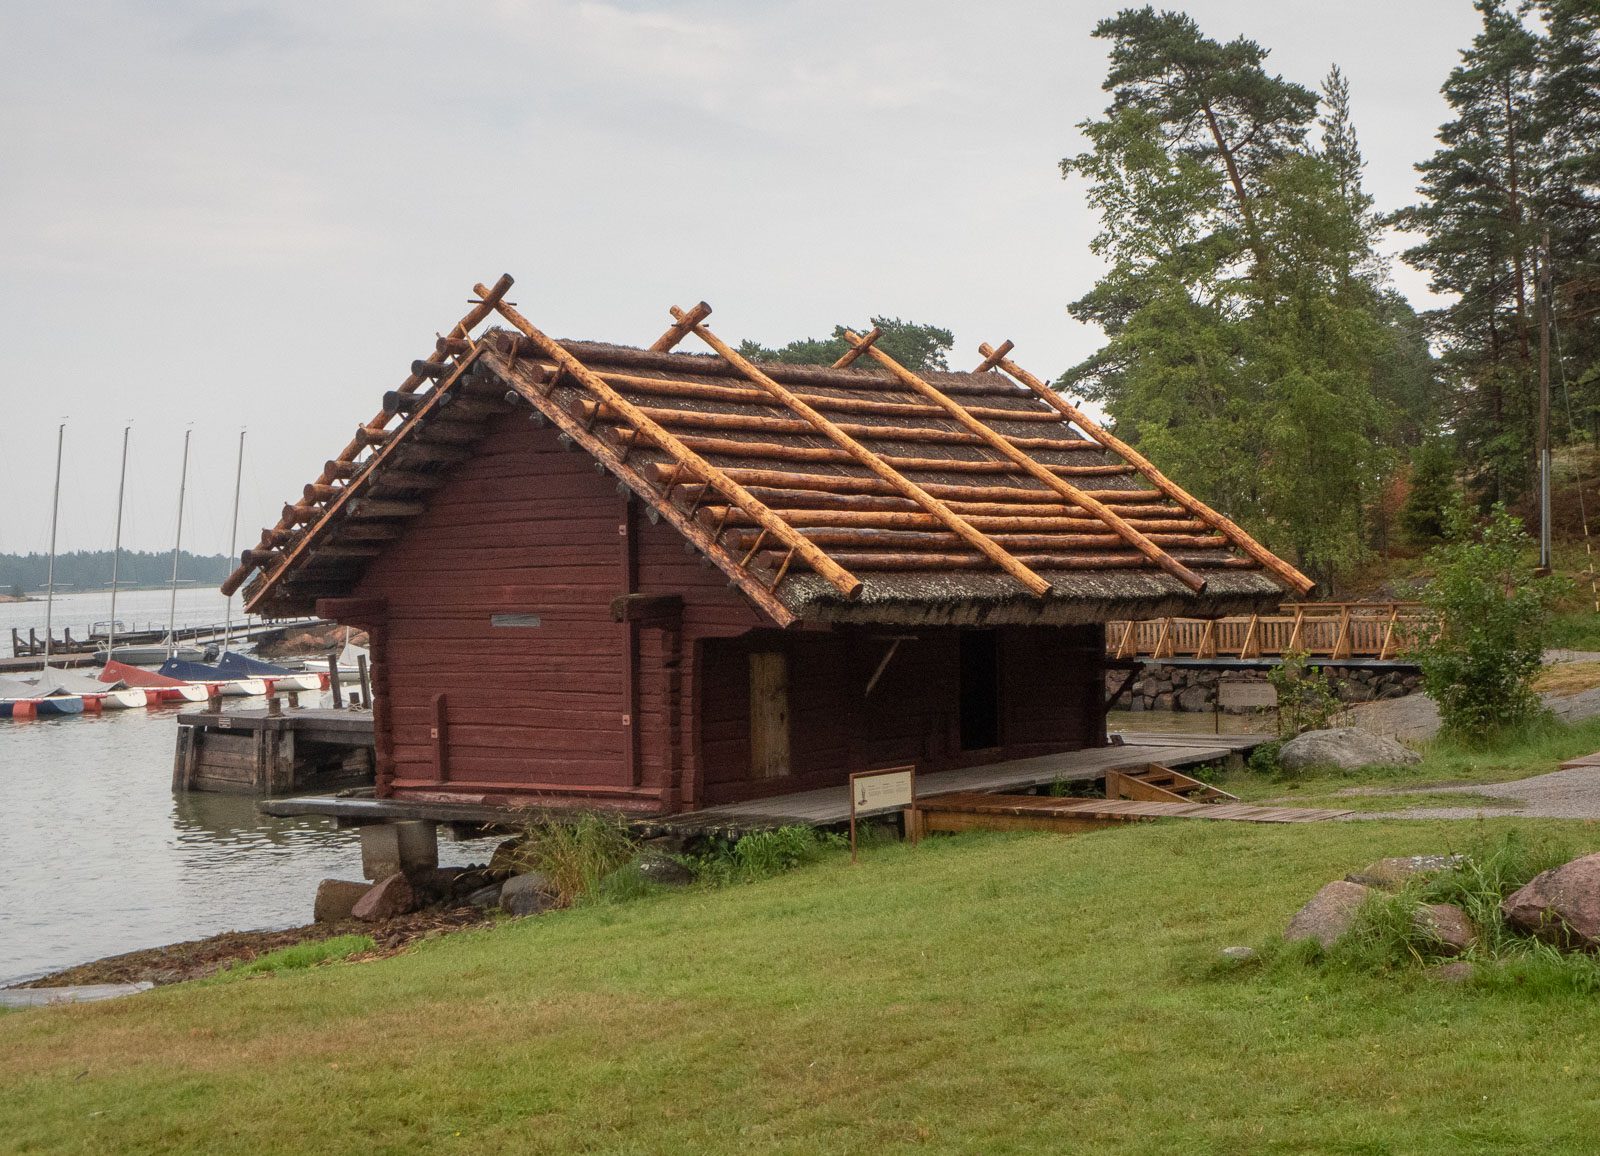 Saaristomuseo Pentala